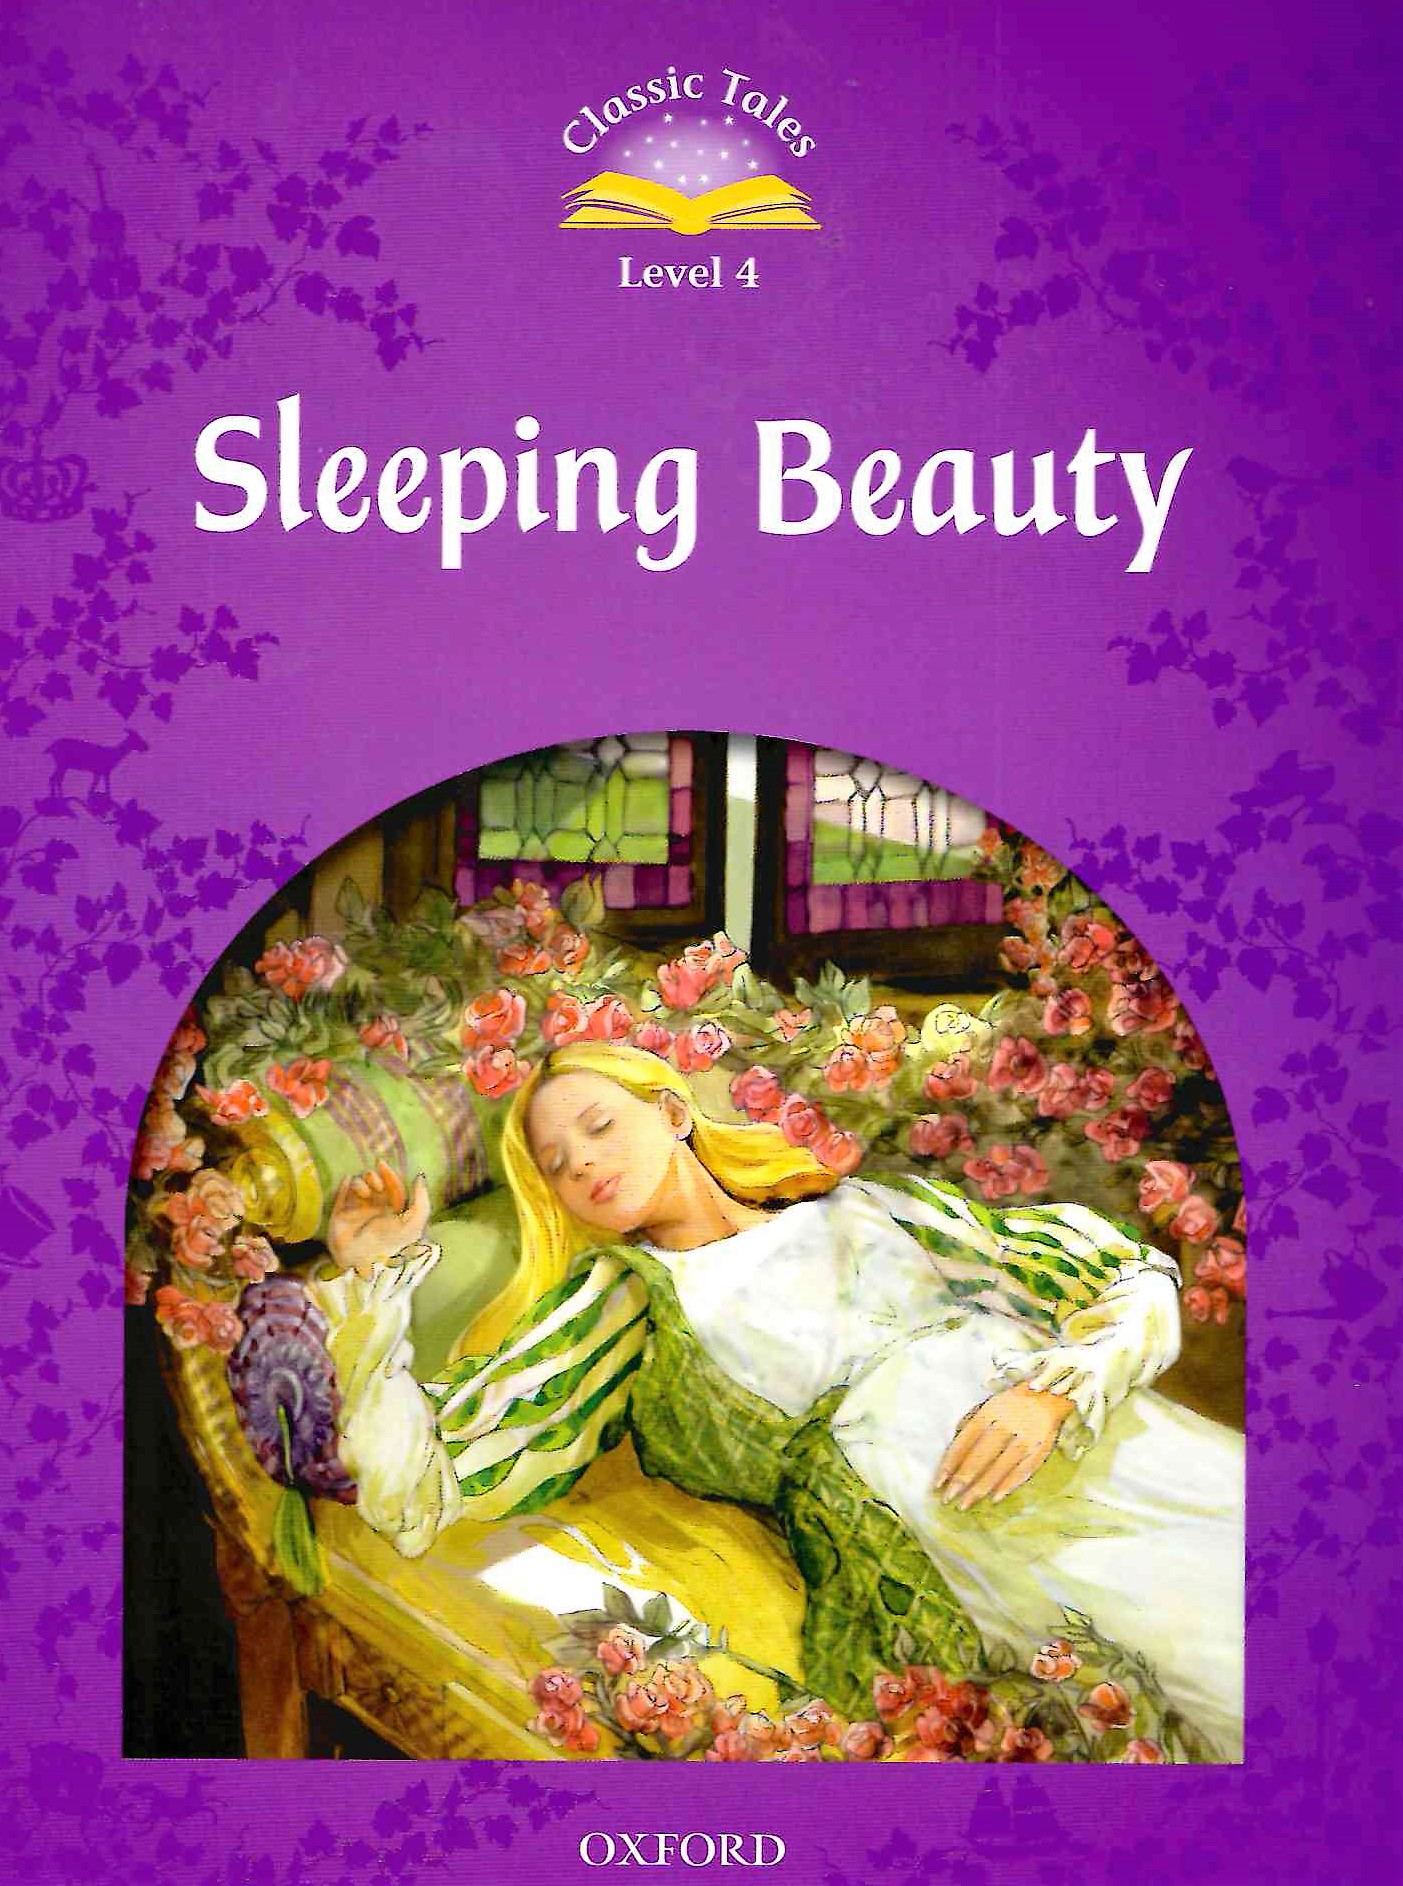 Oxford Classic Tales: Sleeping Beauty + Audio